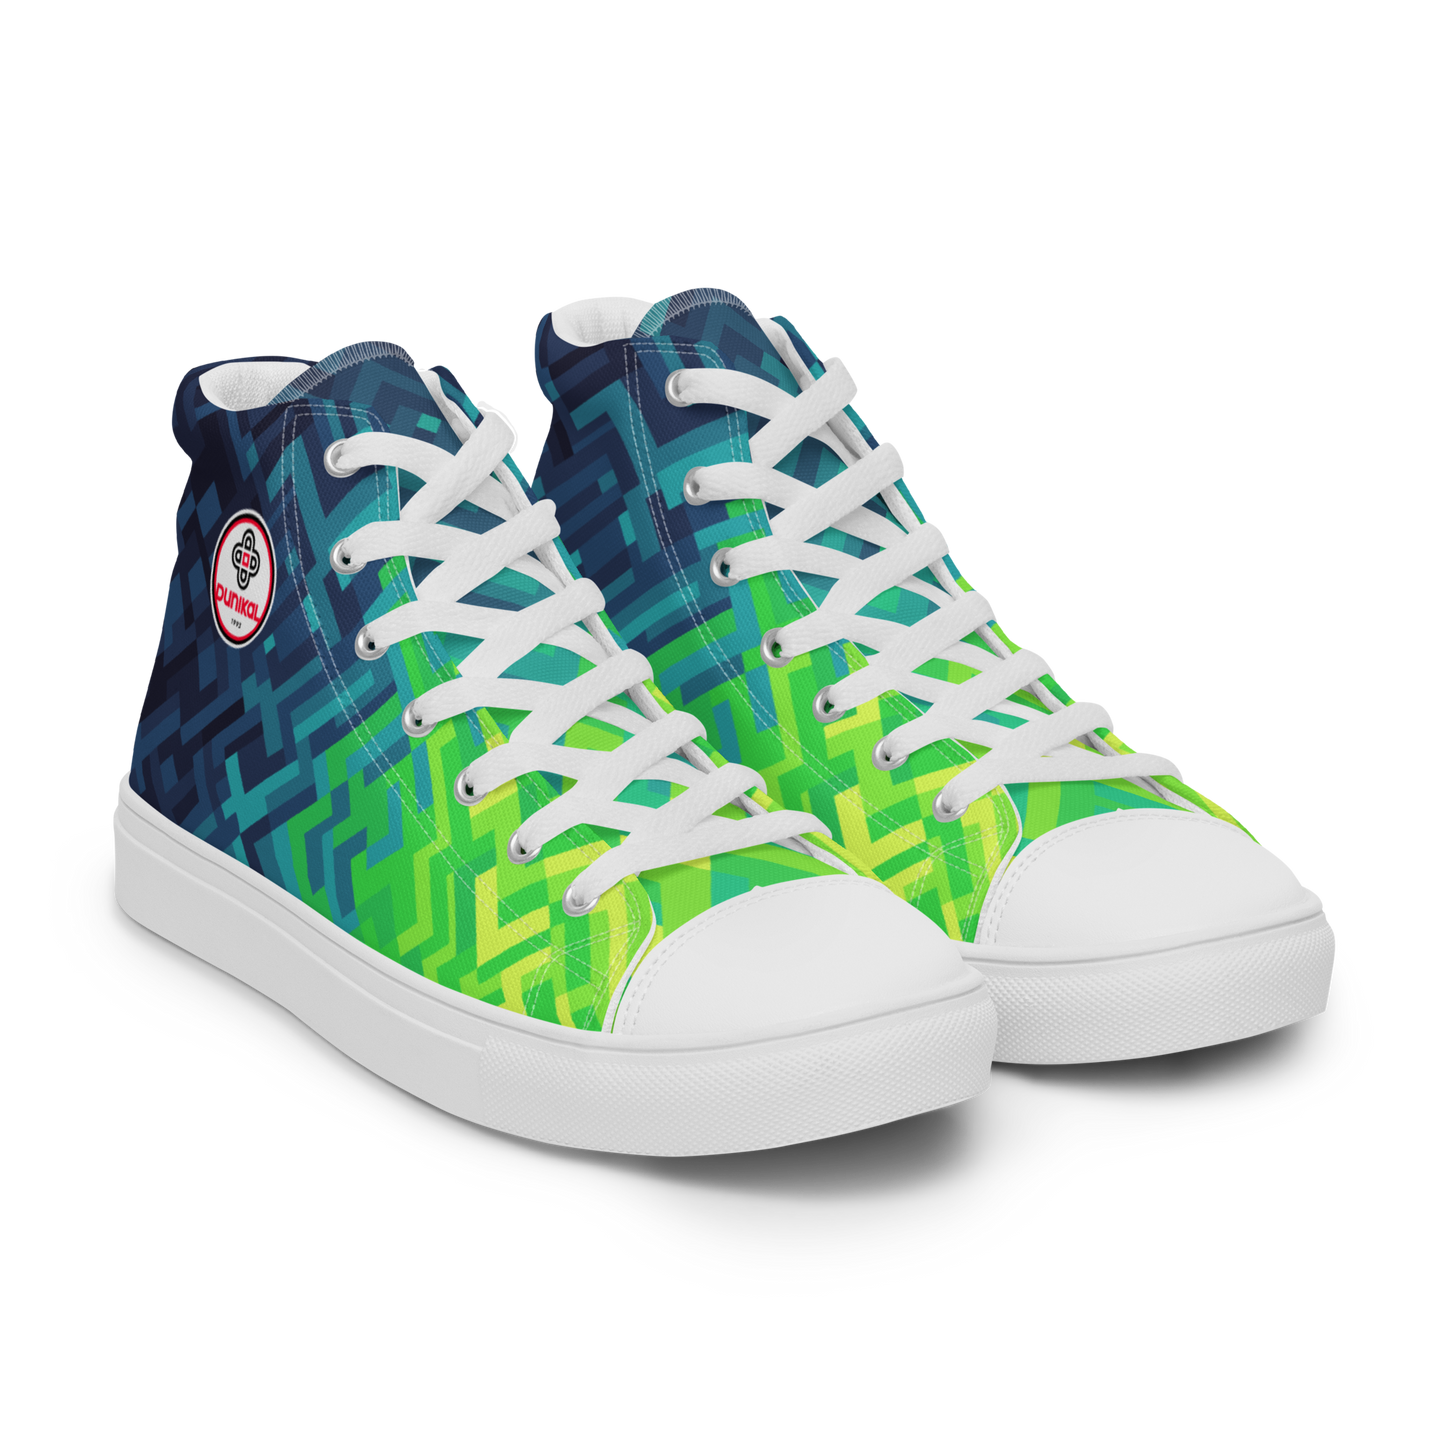 Men's Canvas Sneakers ❯ Polygonal Gradient ❯ Aurora Borealis